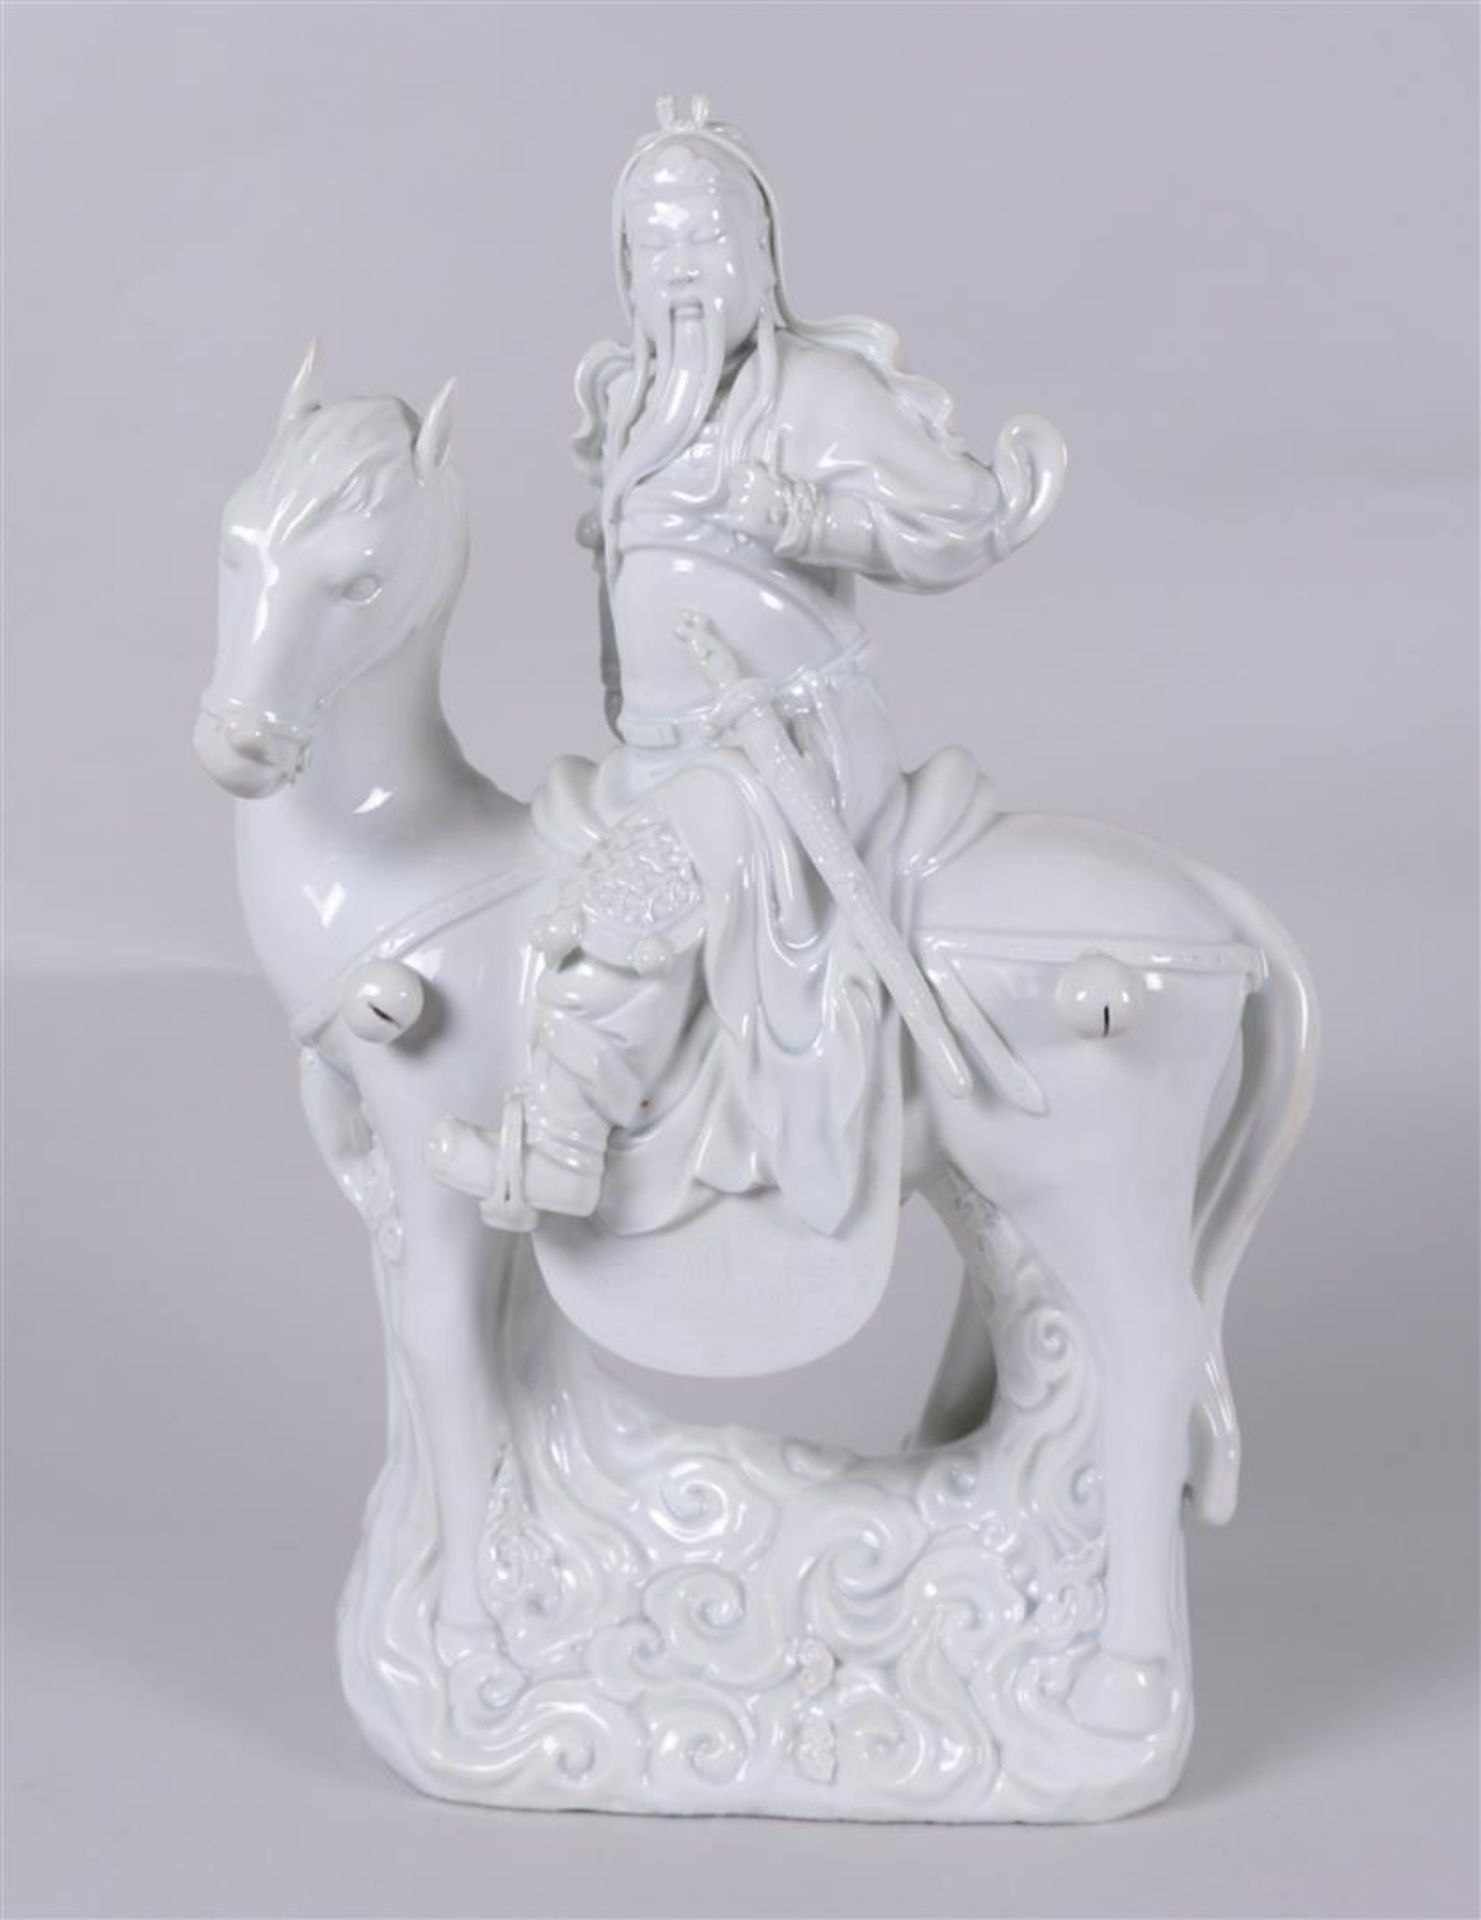 A blanc de Chine figure of a warrior on horseback. China, 20th century.
40 x 30 cm.